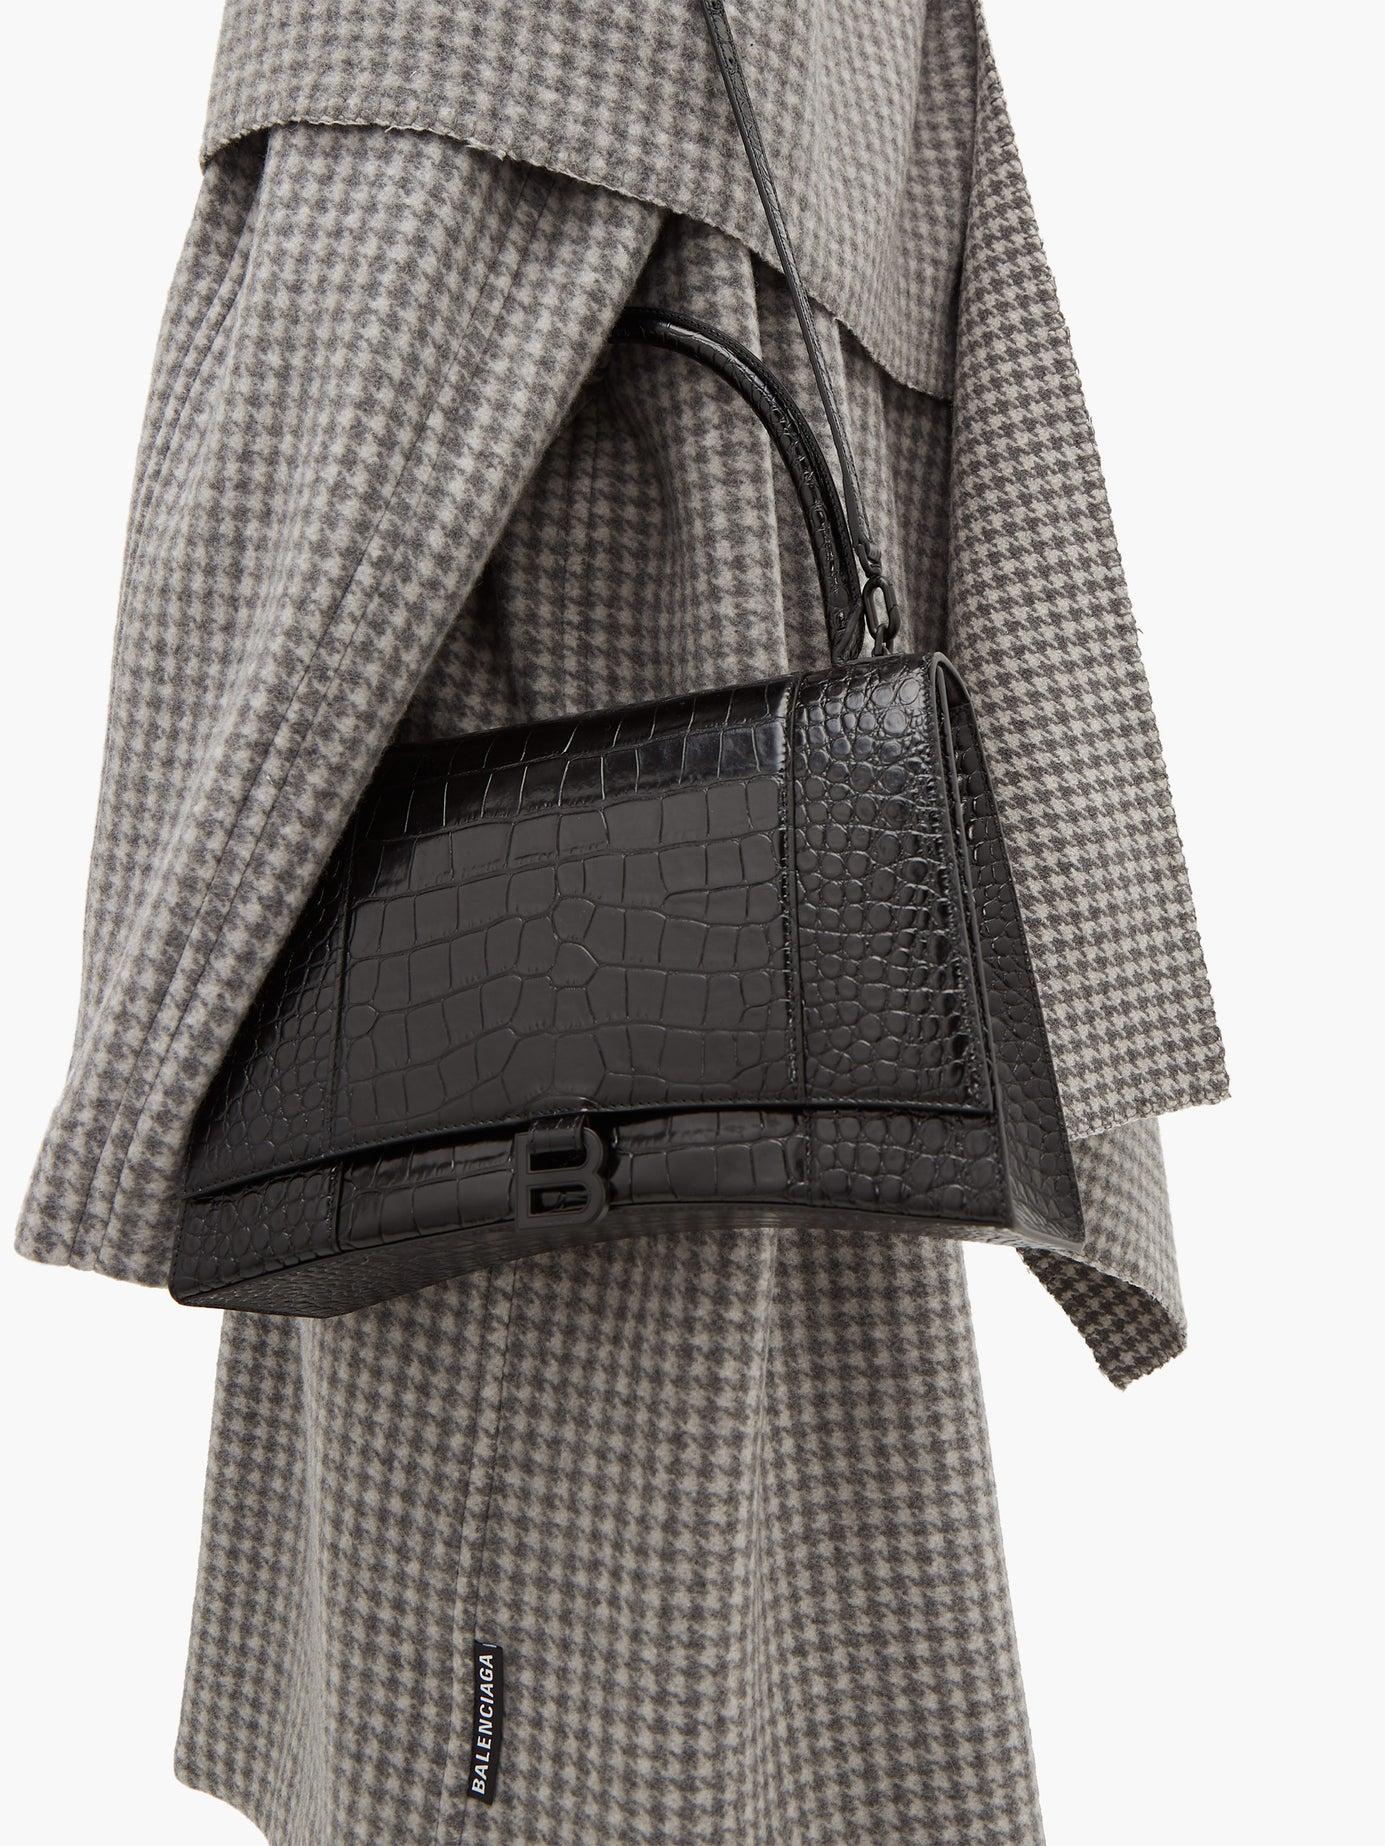 Balenciaga Hourglass Medium Crocodile Embossed Leather Bag in Black | Lyst